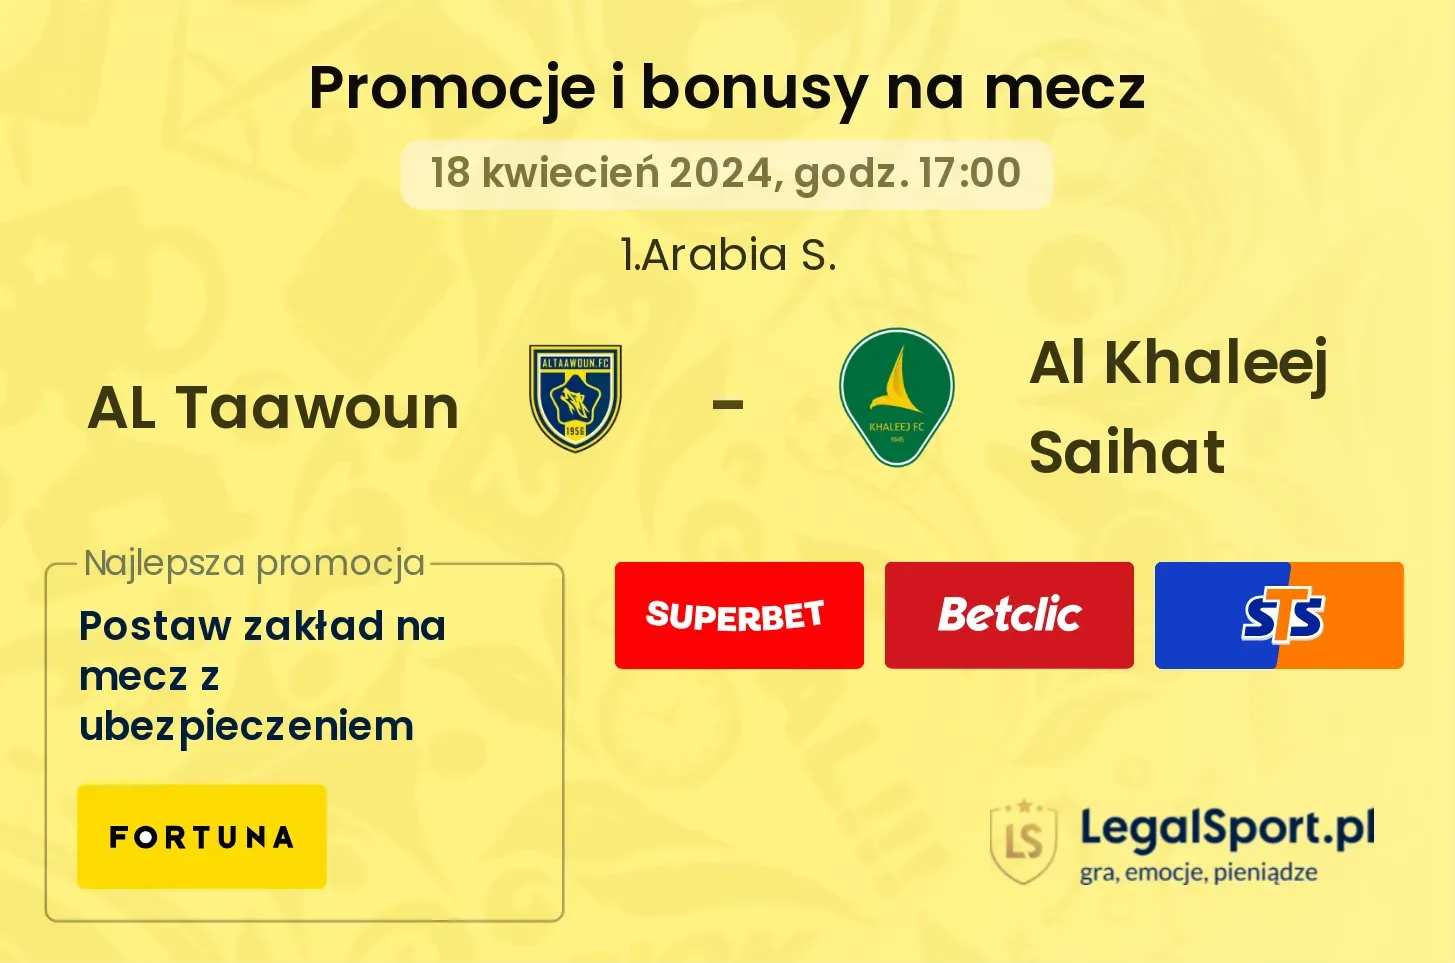 AL Taawoun - Al Khaleej Saihat promocje bonusy na mecz